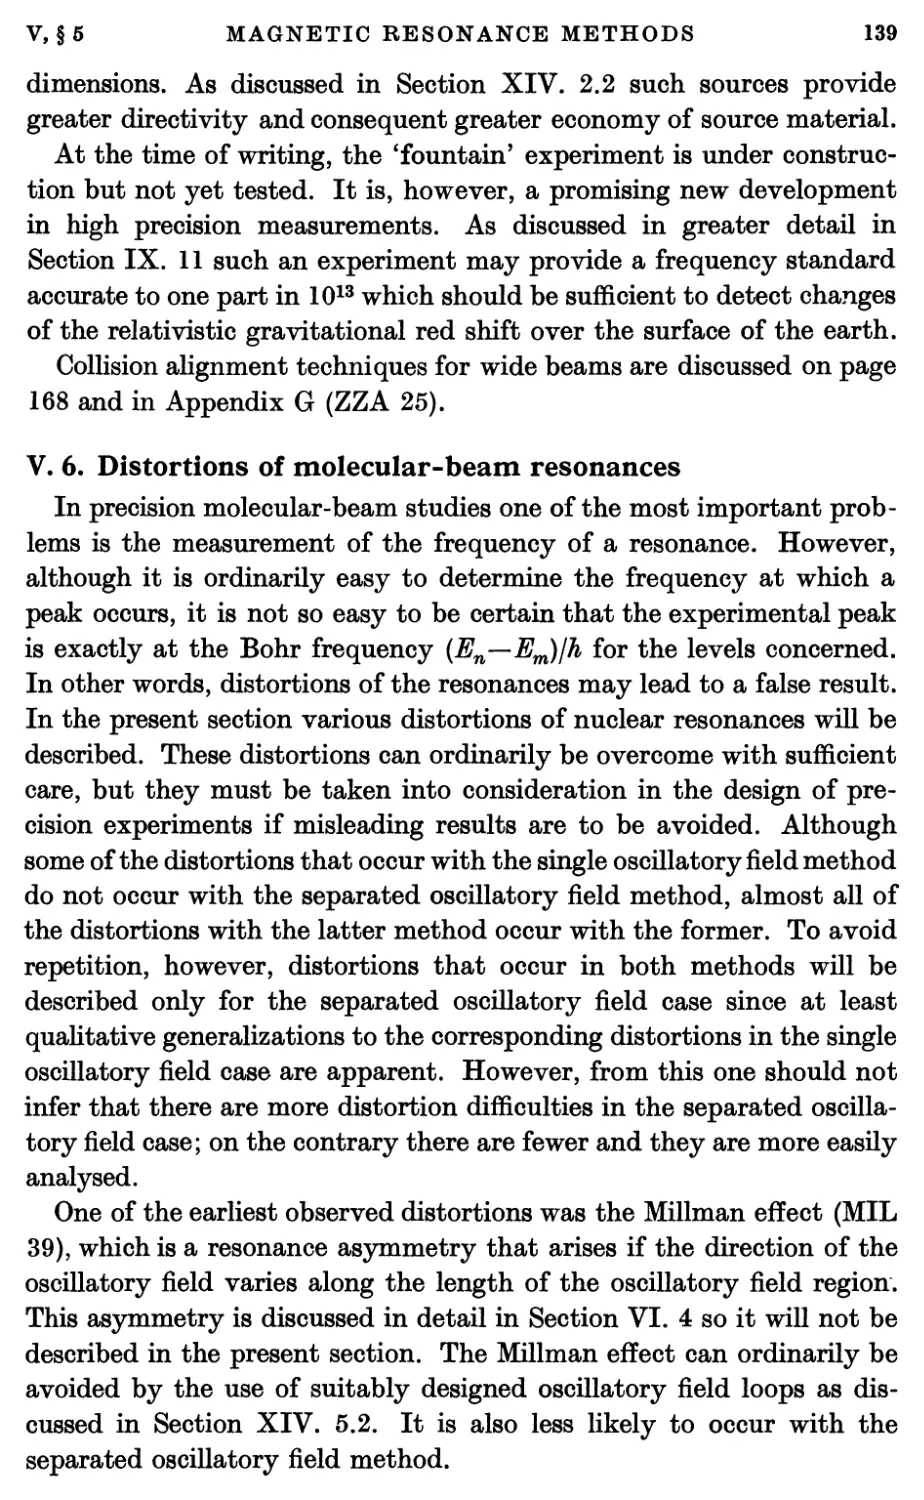 V.6. Distortions of Molecular-beam Resonances